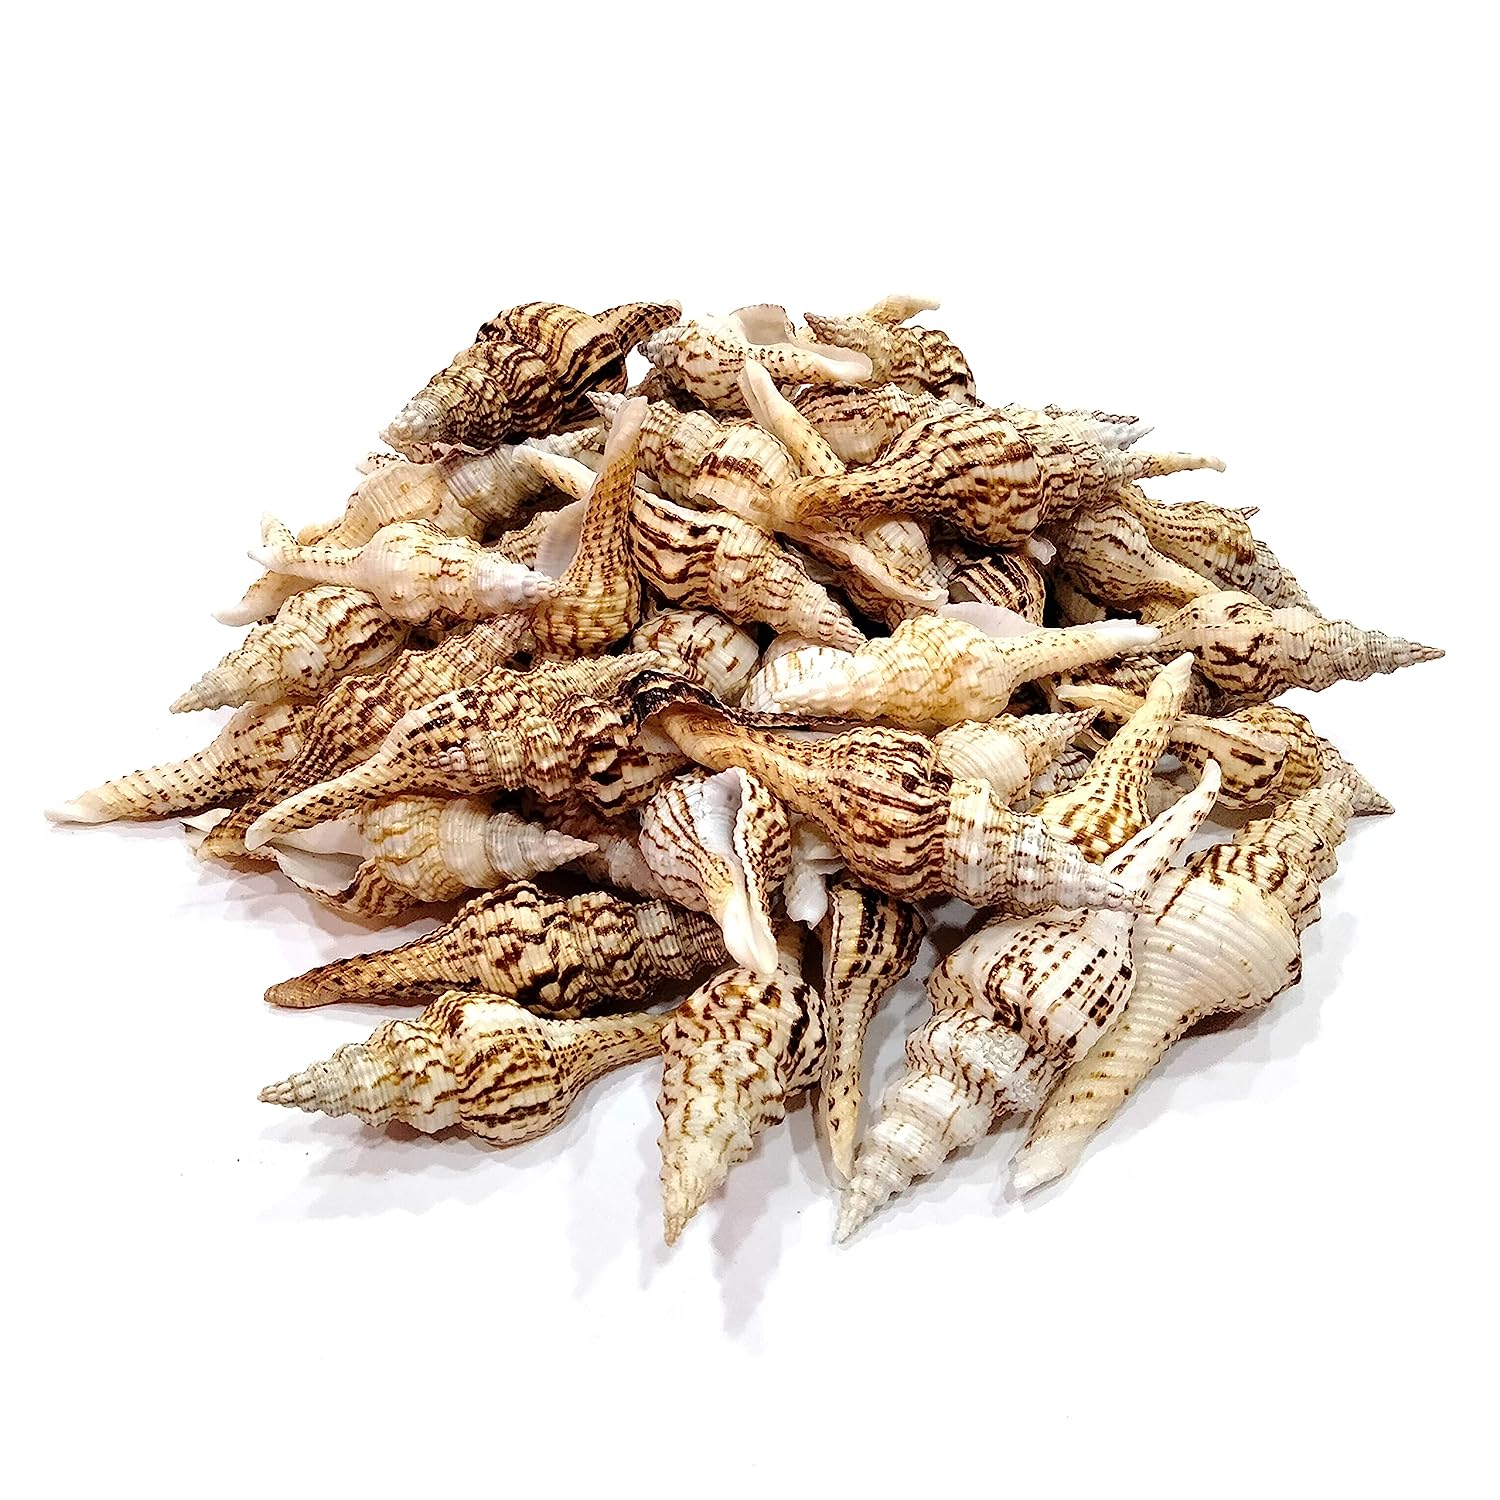 Seashell -  Vari Seval - Nicobar Spindle - Marmarofusus Nicobaricus - Pack of 15  - 500gm